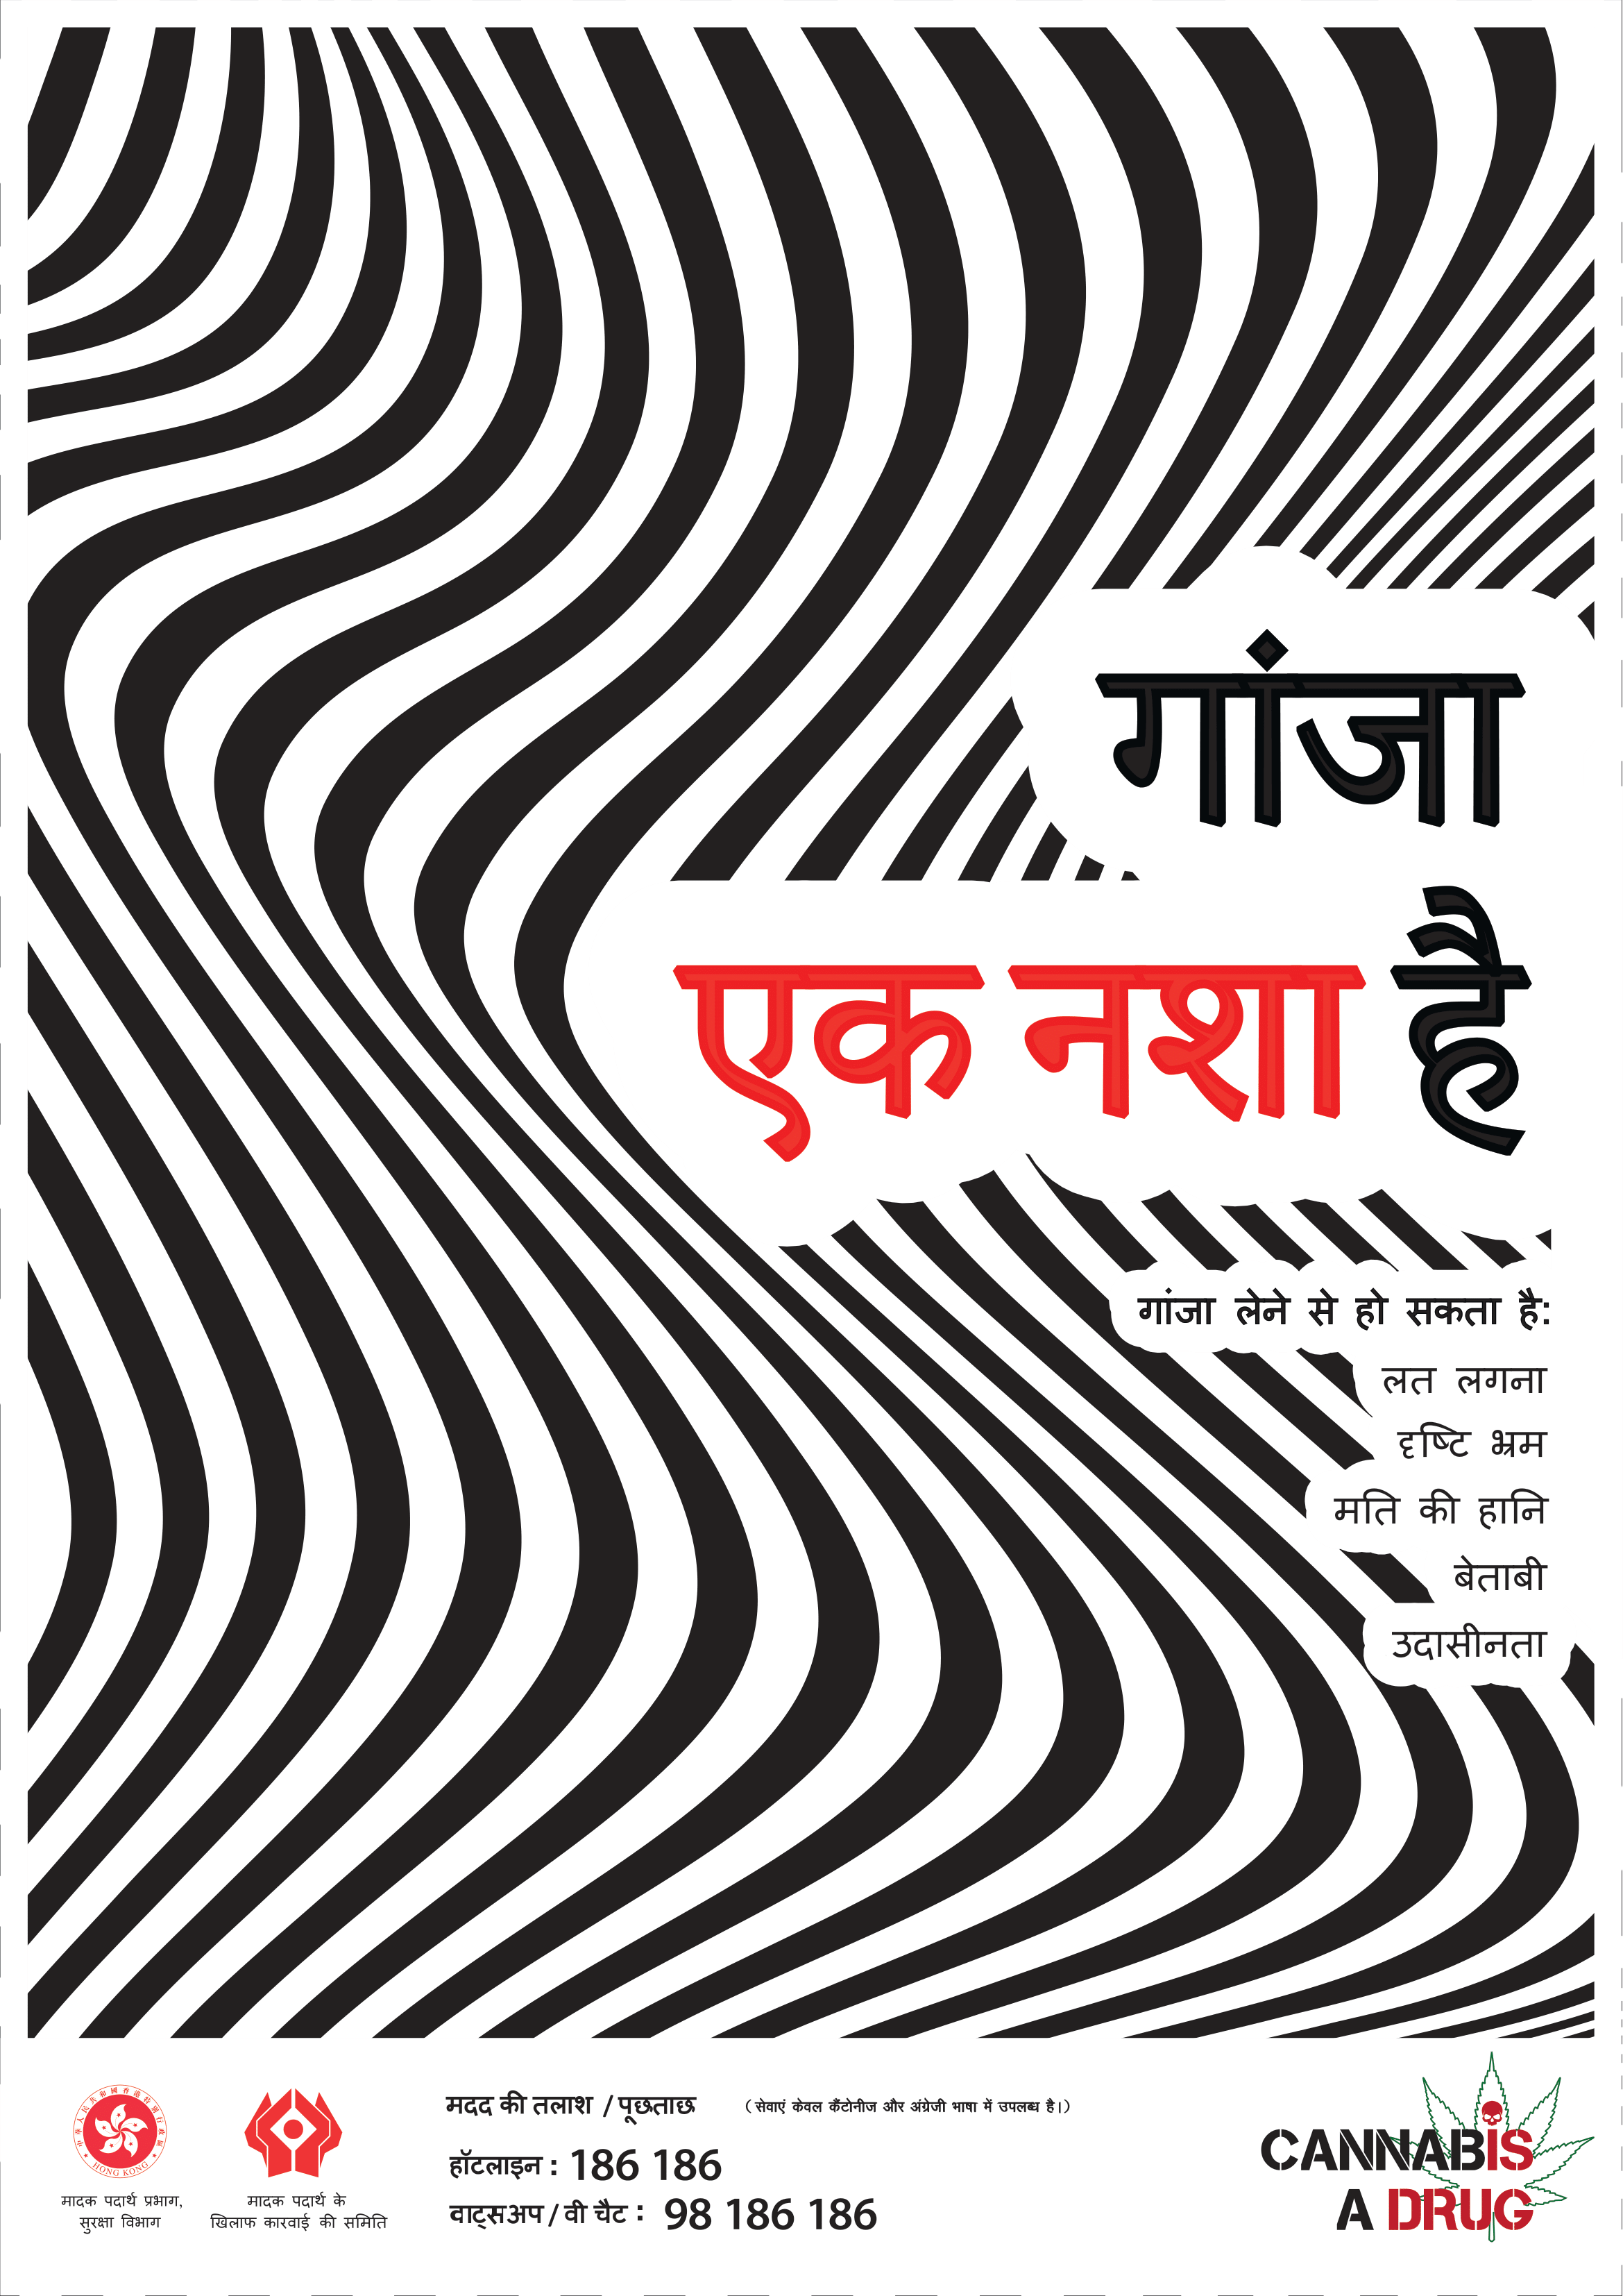 Anti-drug poster "Cannabis is a drug" - Hindi version